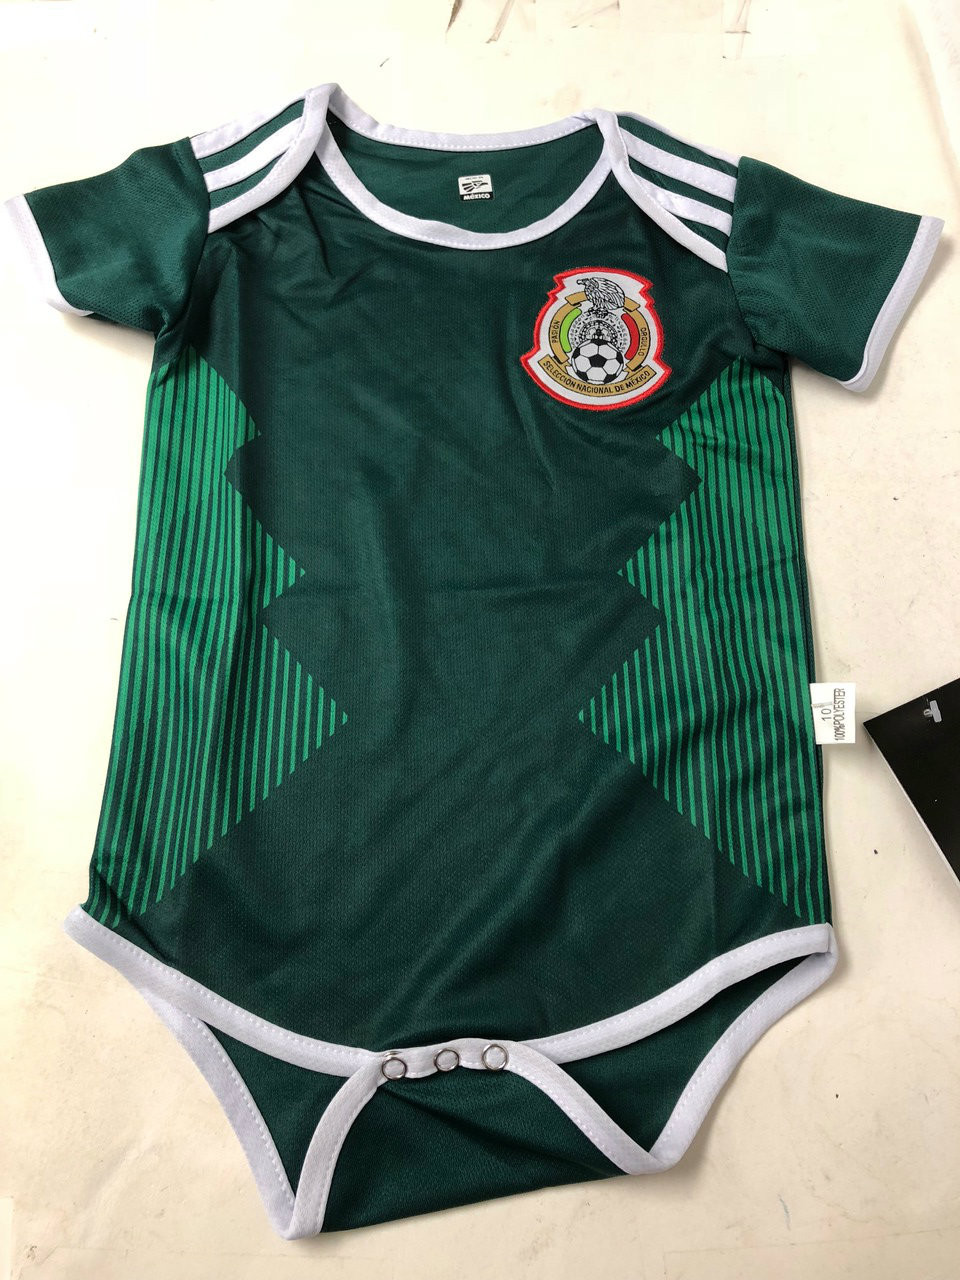 baby soccer jersey